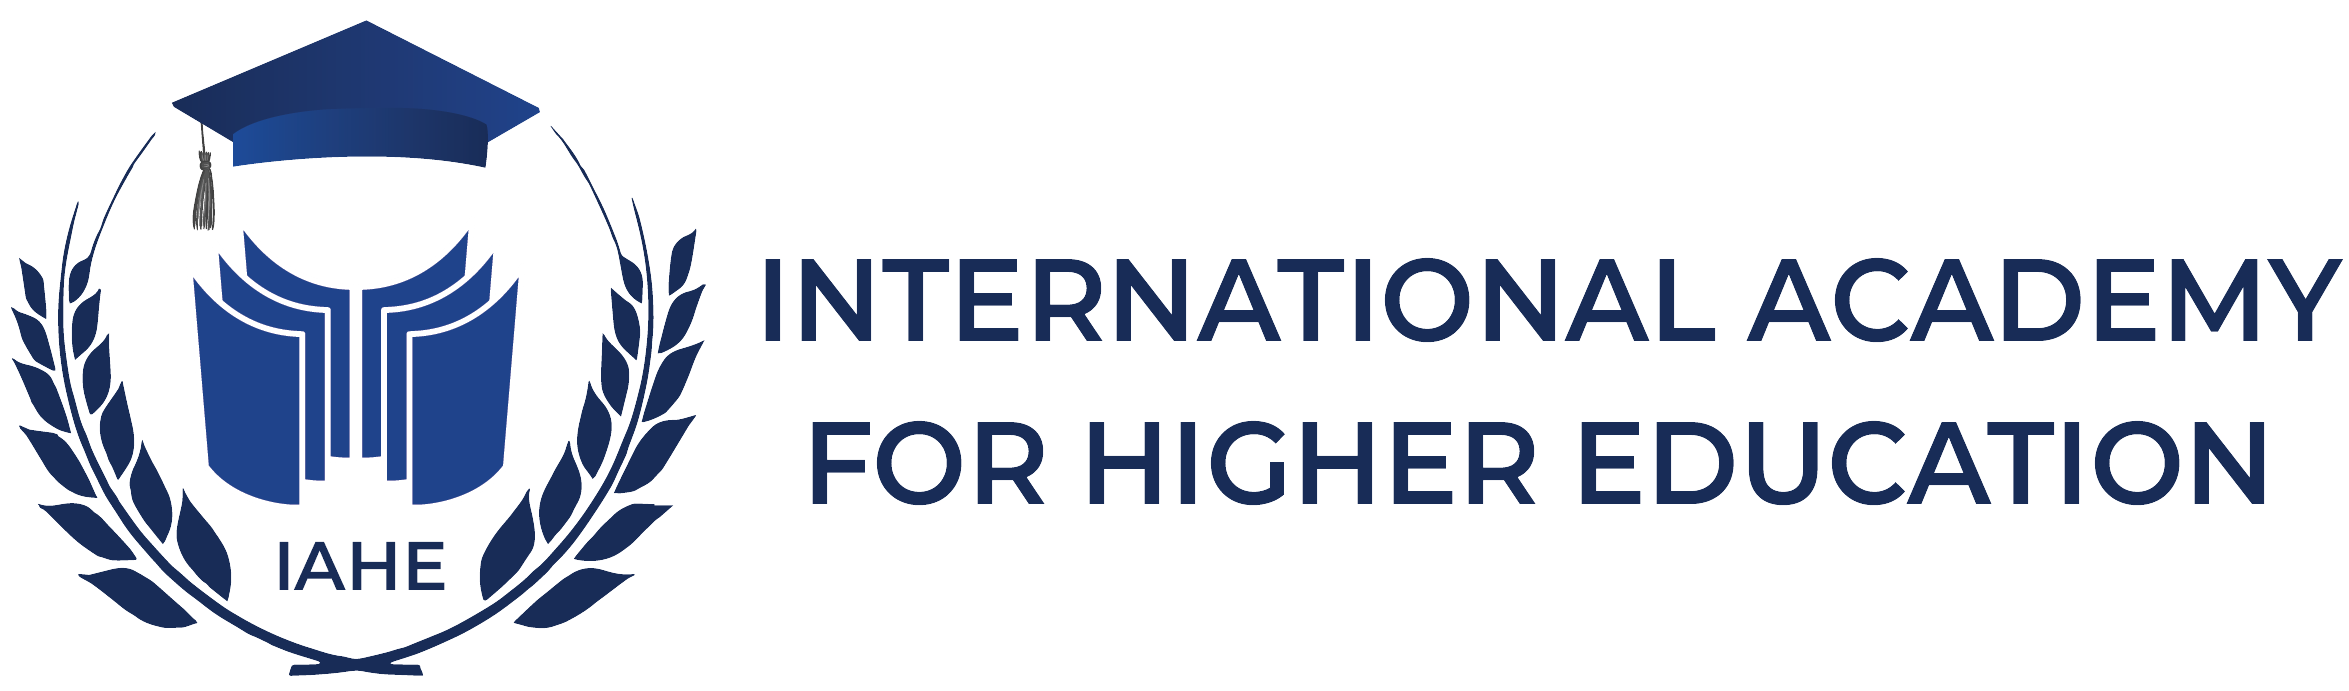 International Academy for Higher Education